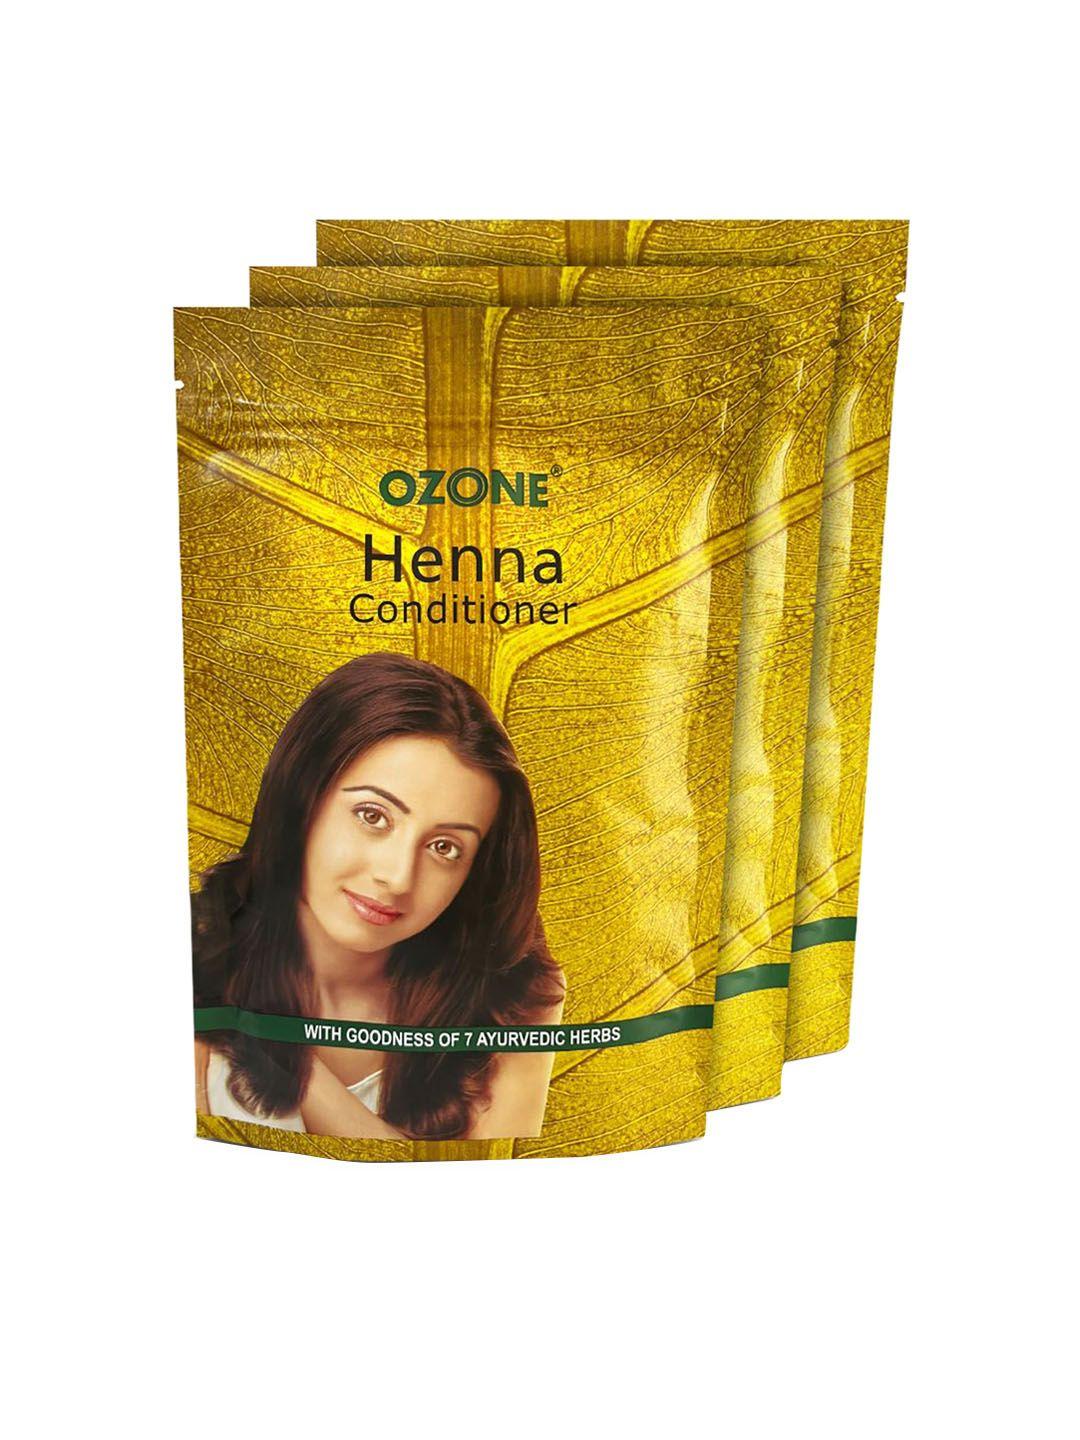 ozone set of 3 100% organic henna conditioner mehndi with 7 ayurvedic herbs - 200g each